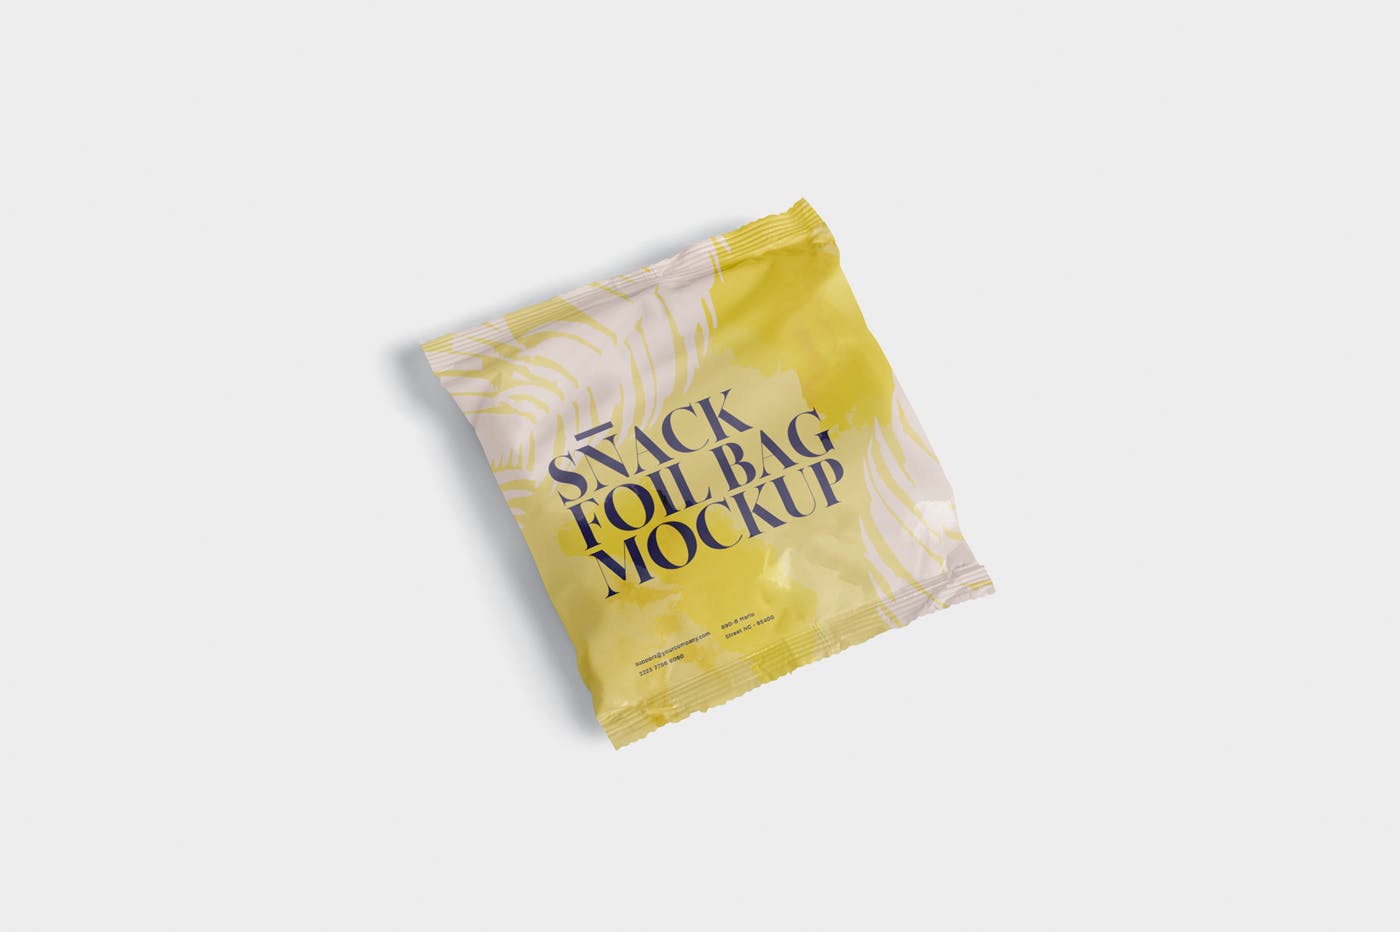 小吃零食铝箔包装袋设计图第一素材精选 Snack Foil Bag Mockup – Square Size – Small插图(4)